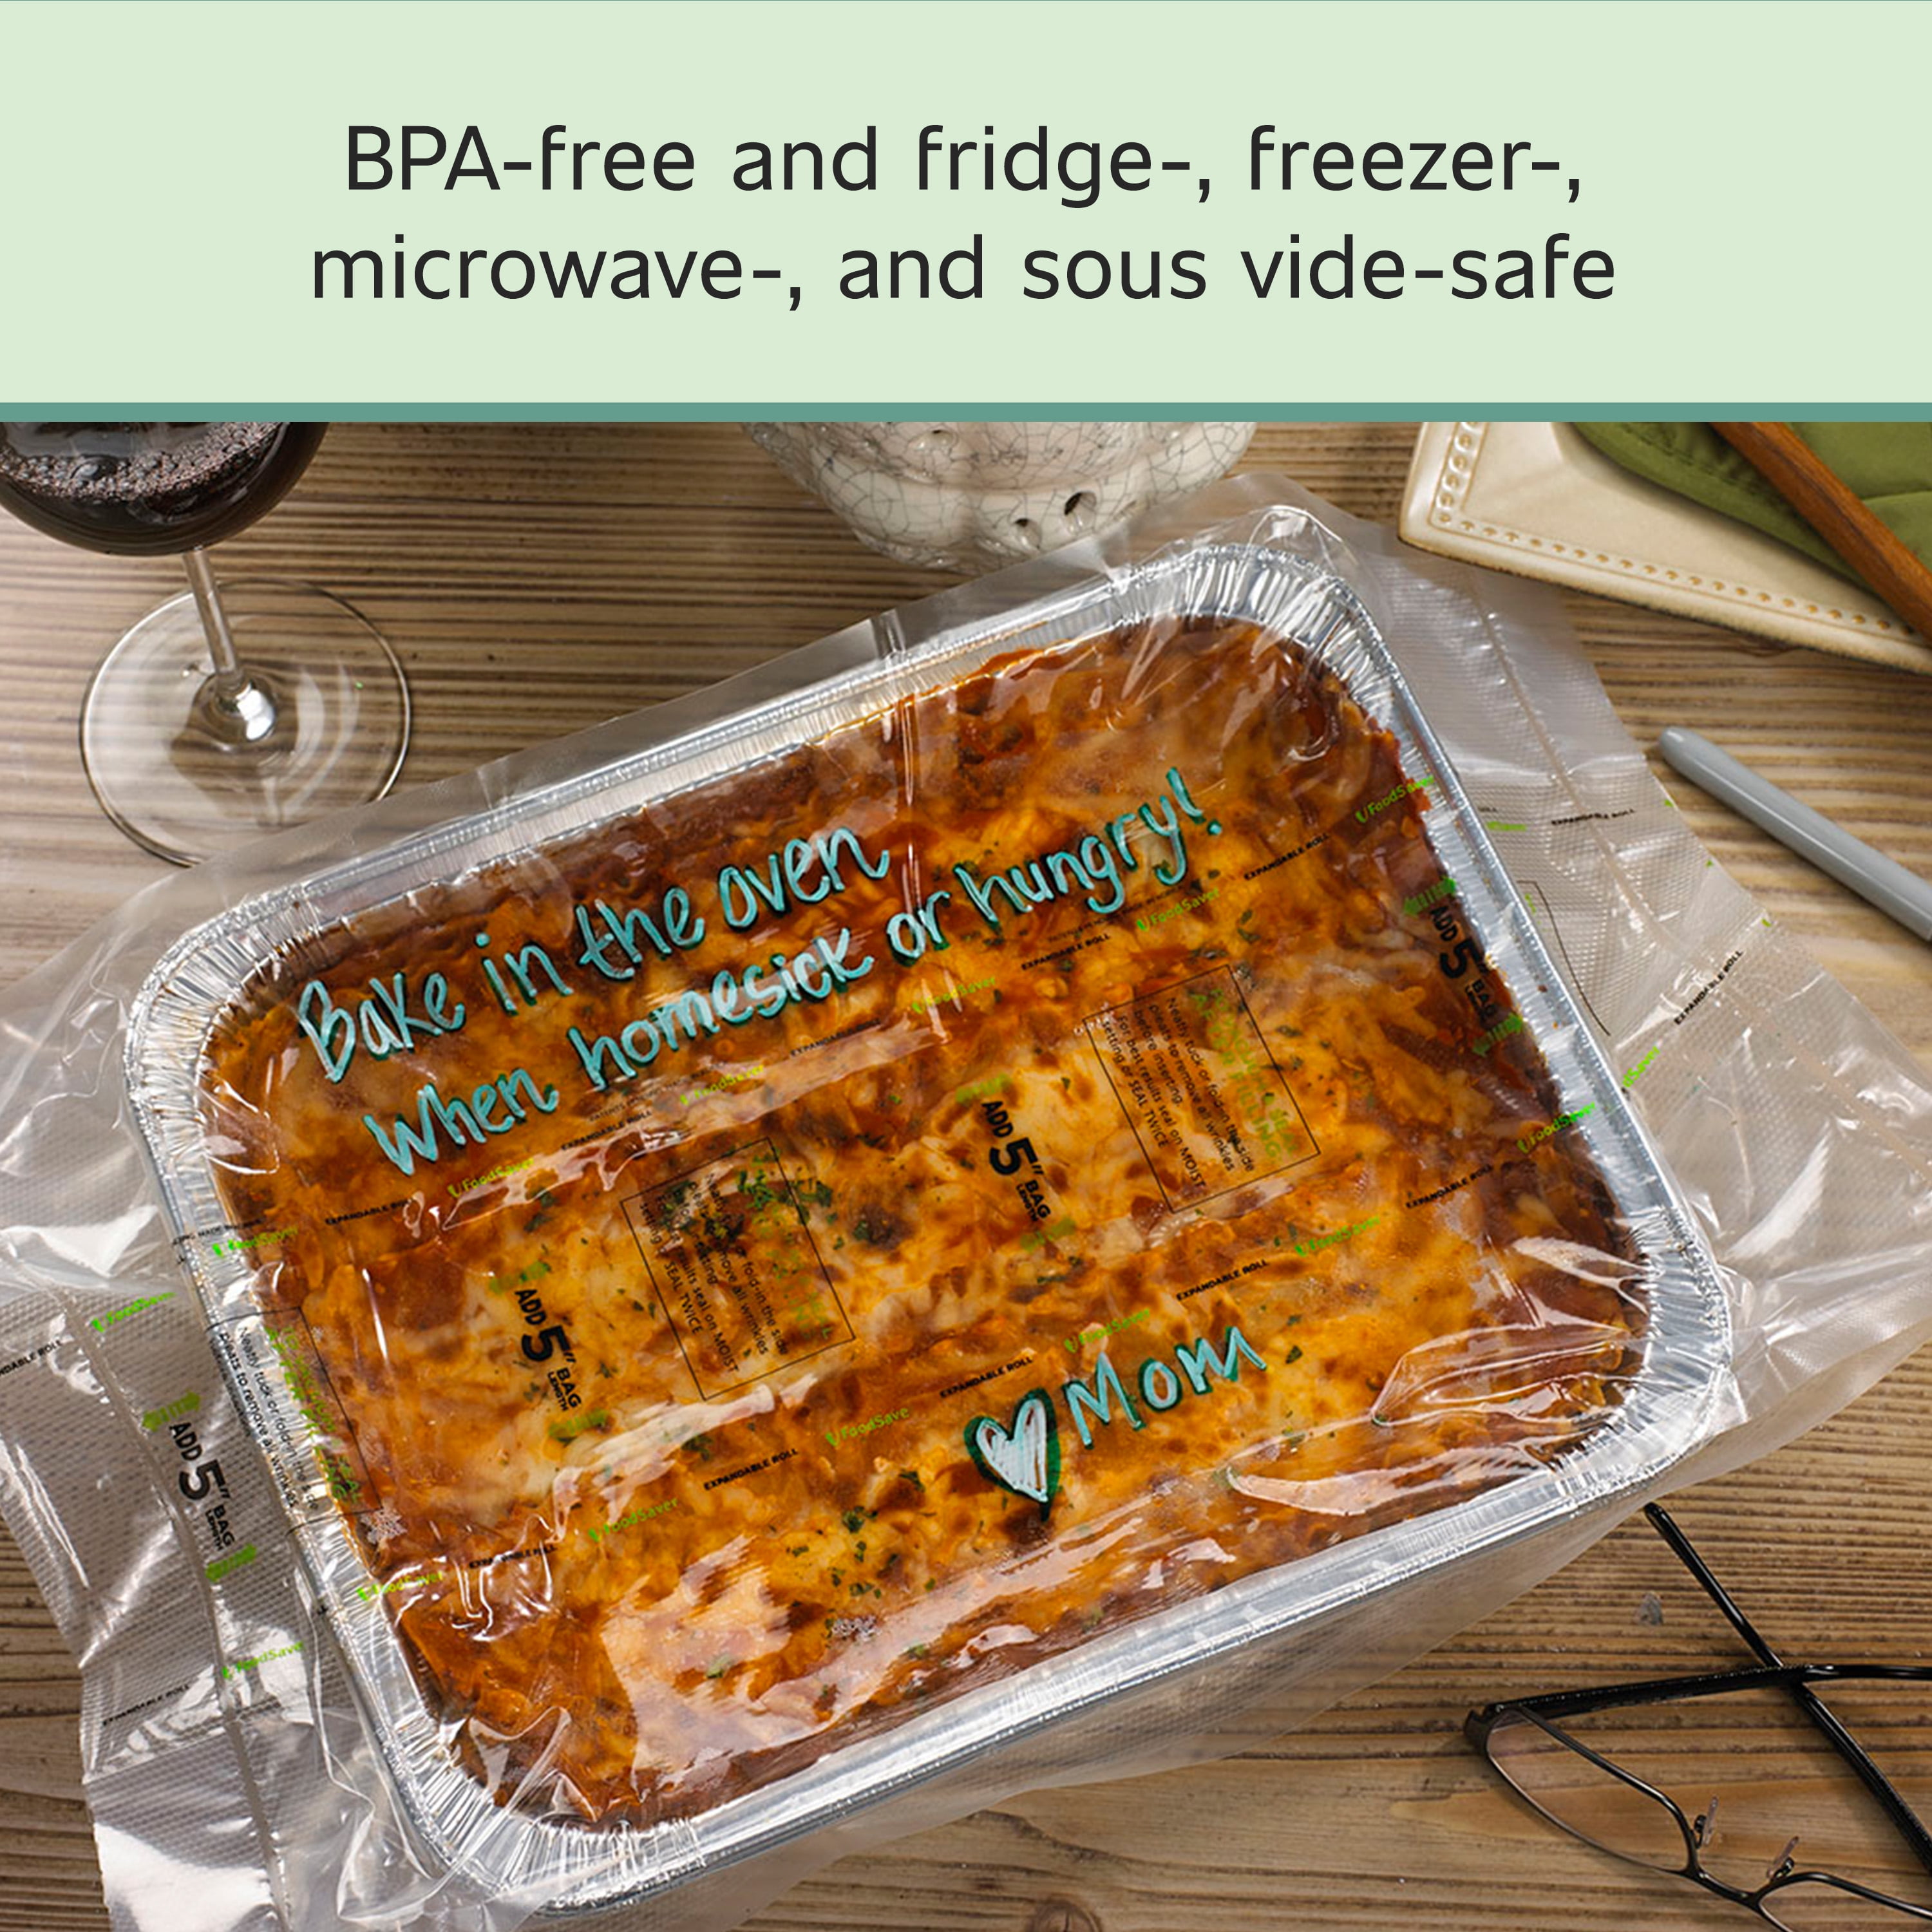 FoodSaver Heat-Seal Rolls, 11 Inch, Baking & Food Storage